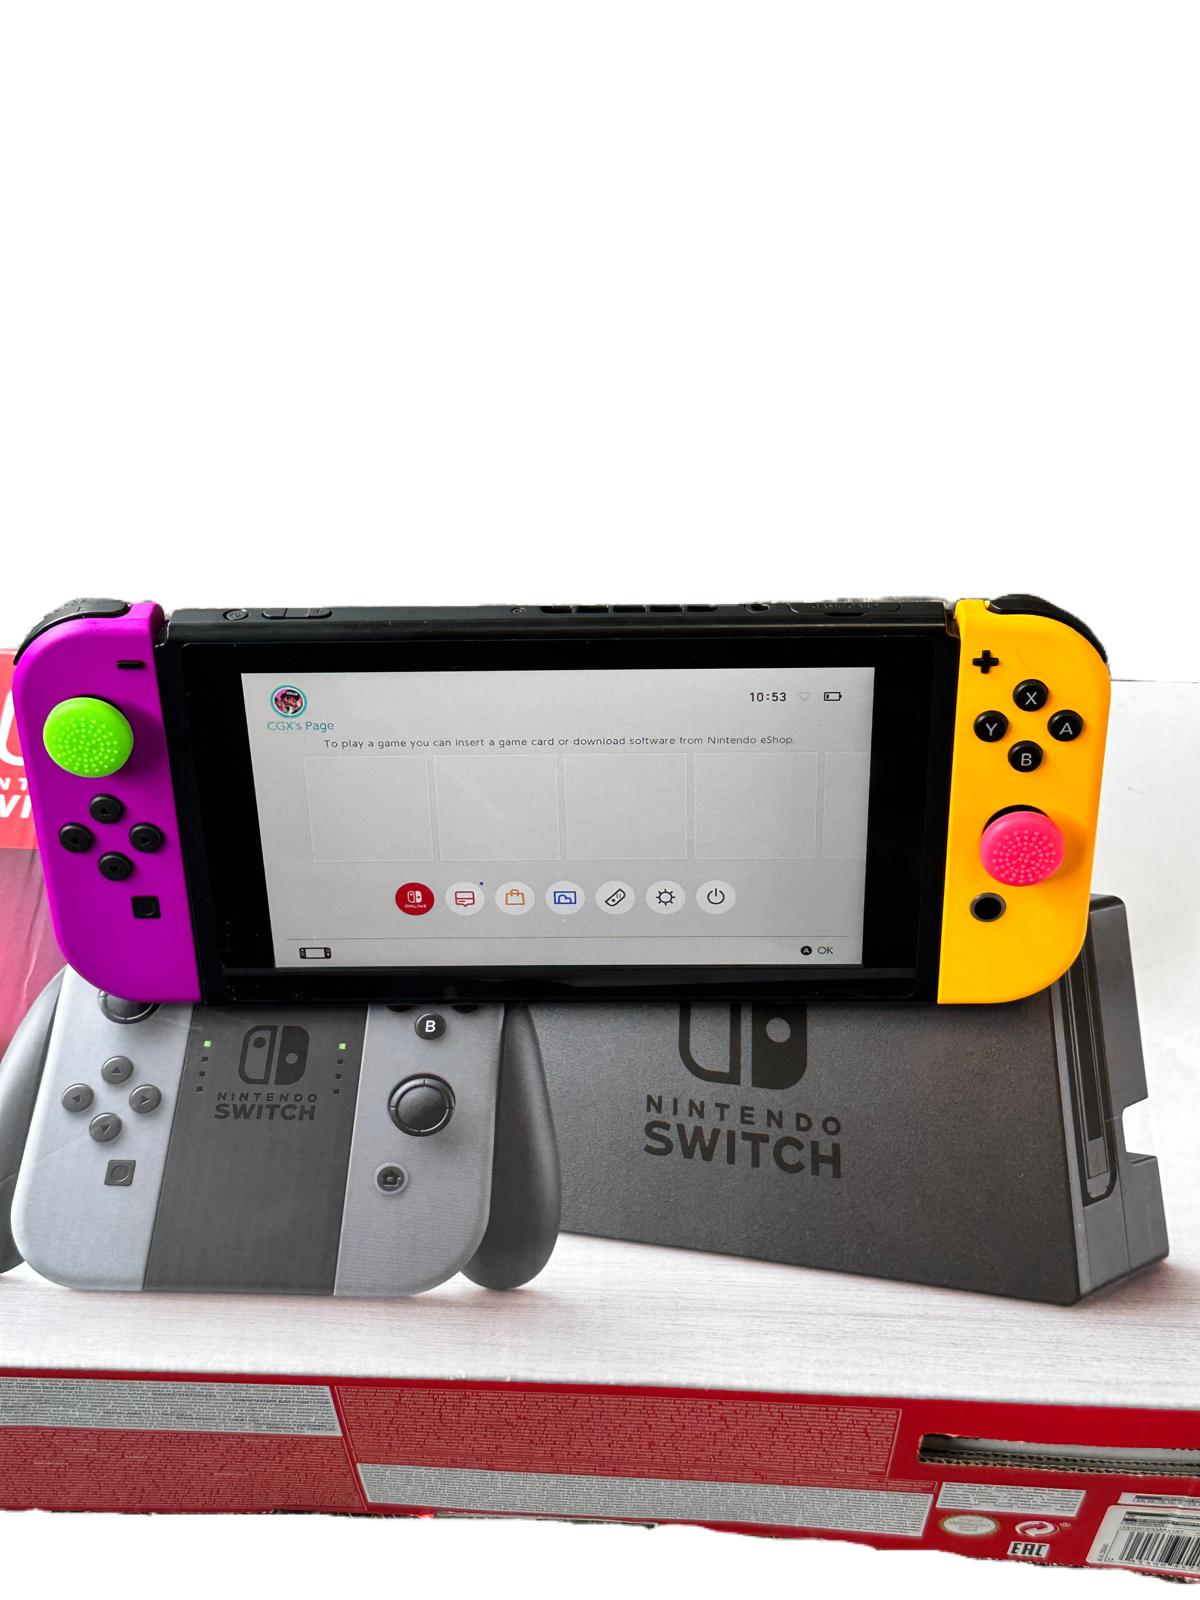 Nintendo switch boxed Grey Orange + purple joy-cons 